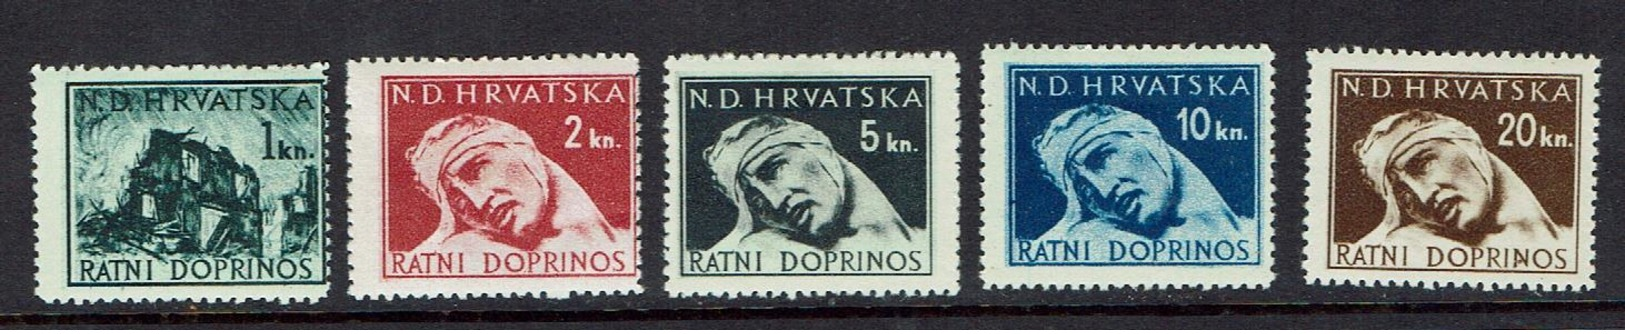 CROATIA...1940'S...Postal Tax - Croatia